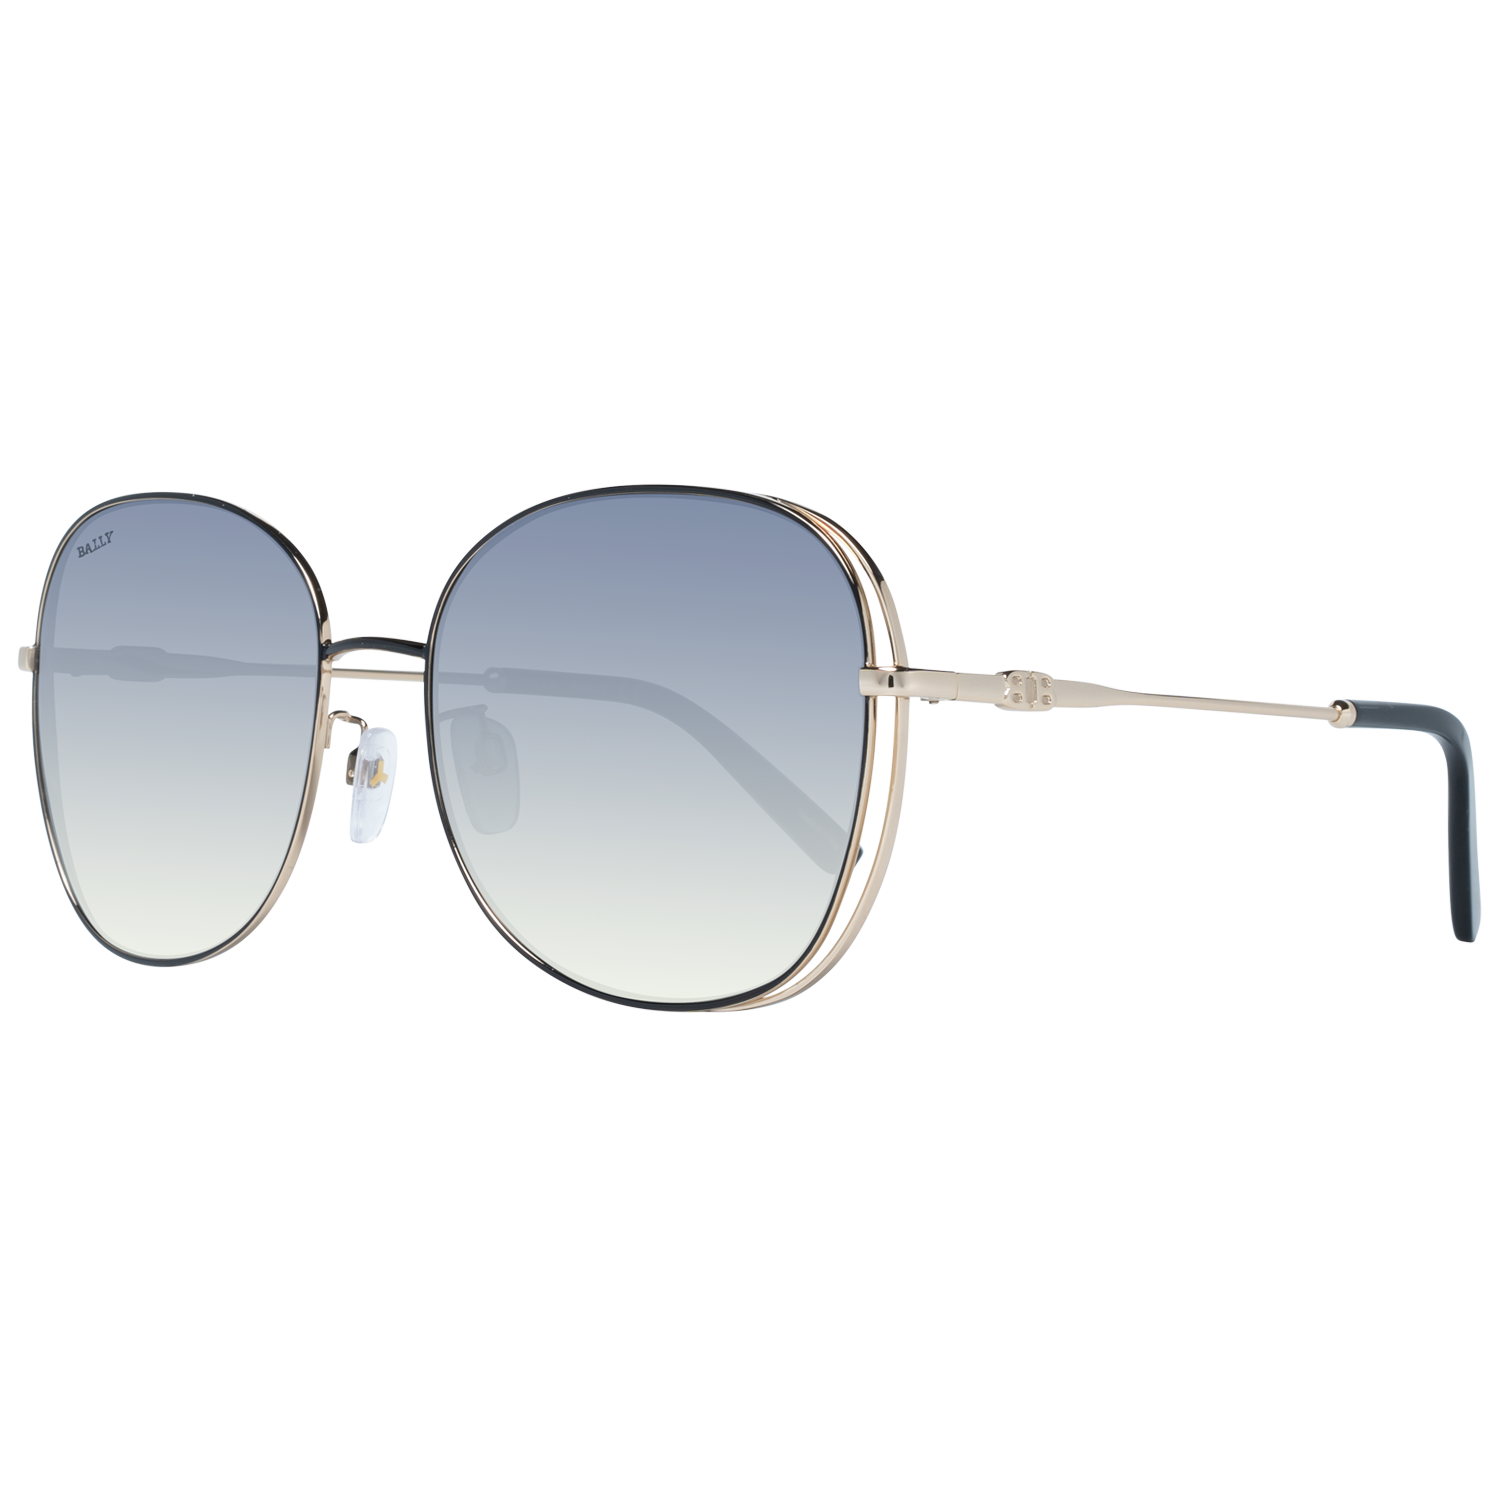 Bally Sunglasses Bally Sunglasses BY0051-K 01D 61 Eyeglasses Eyewear UK USA Australia 